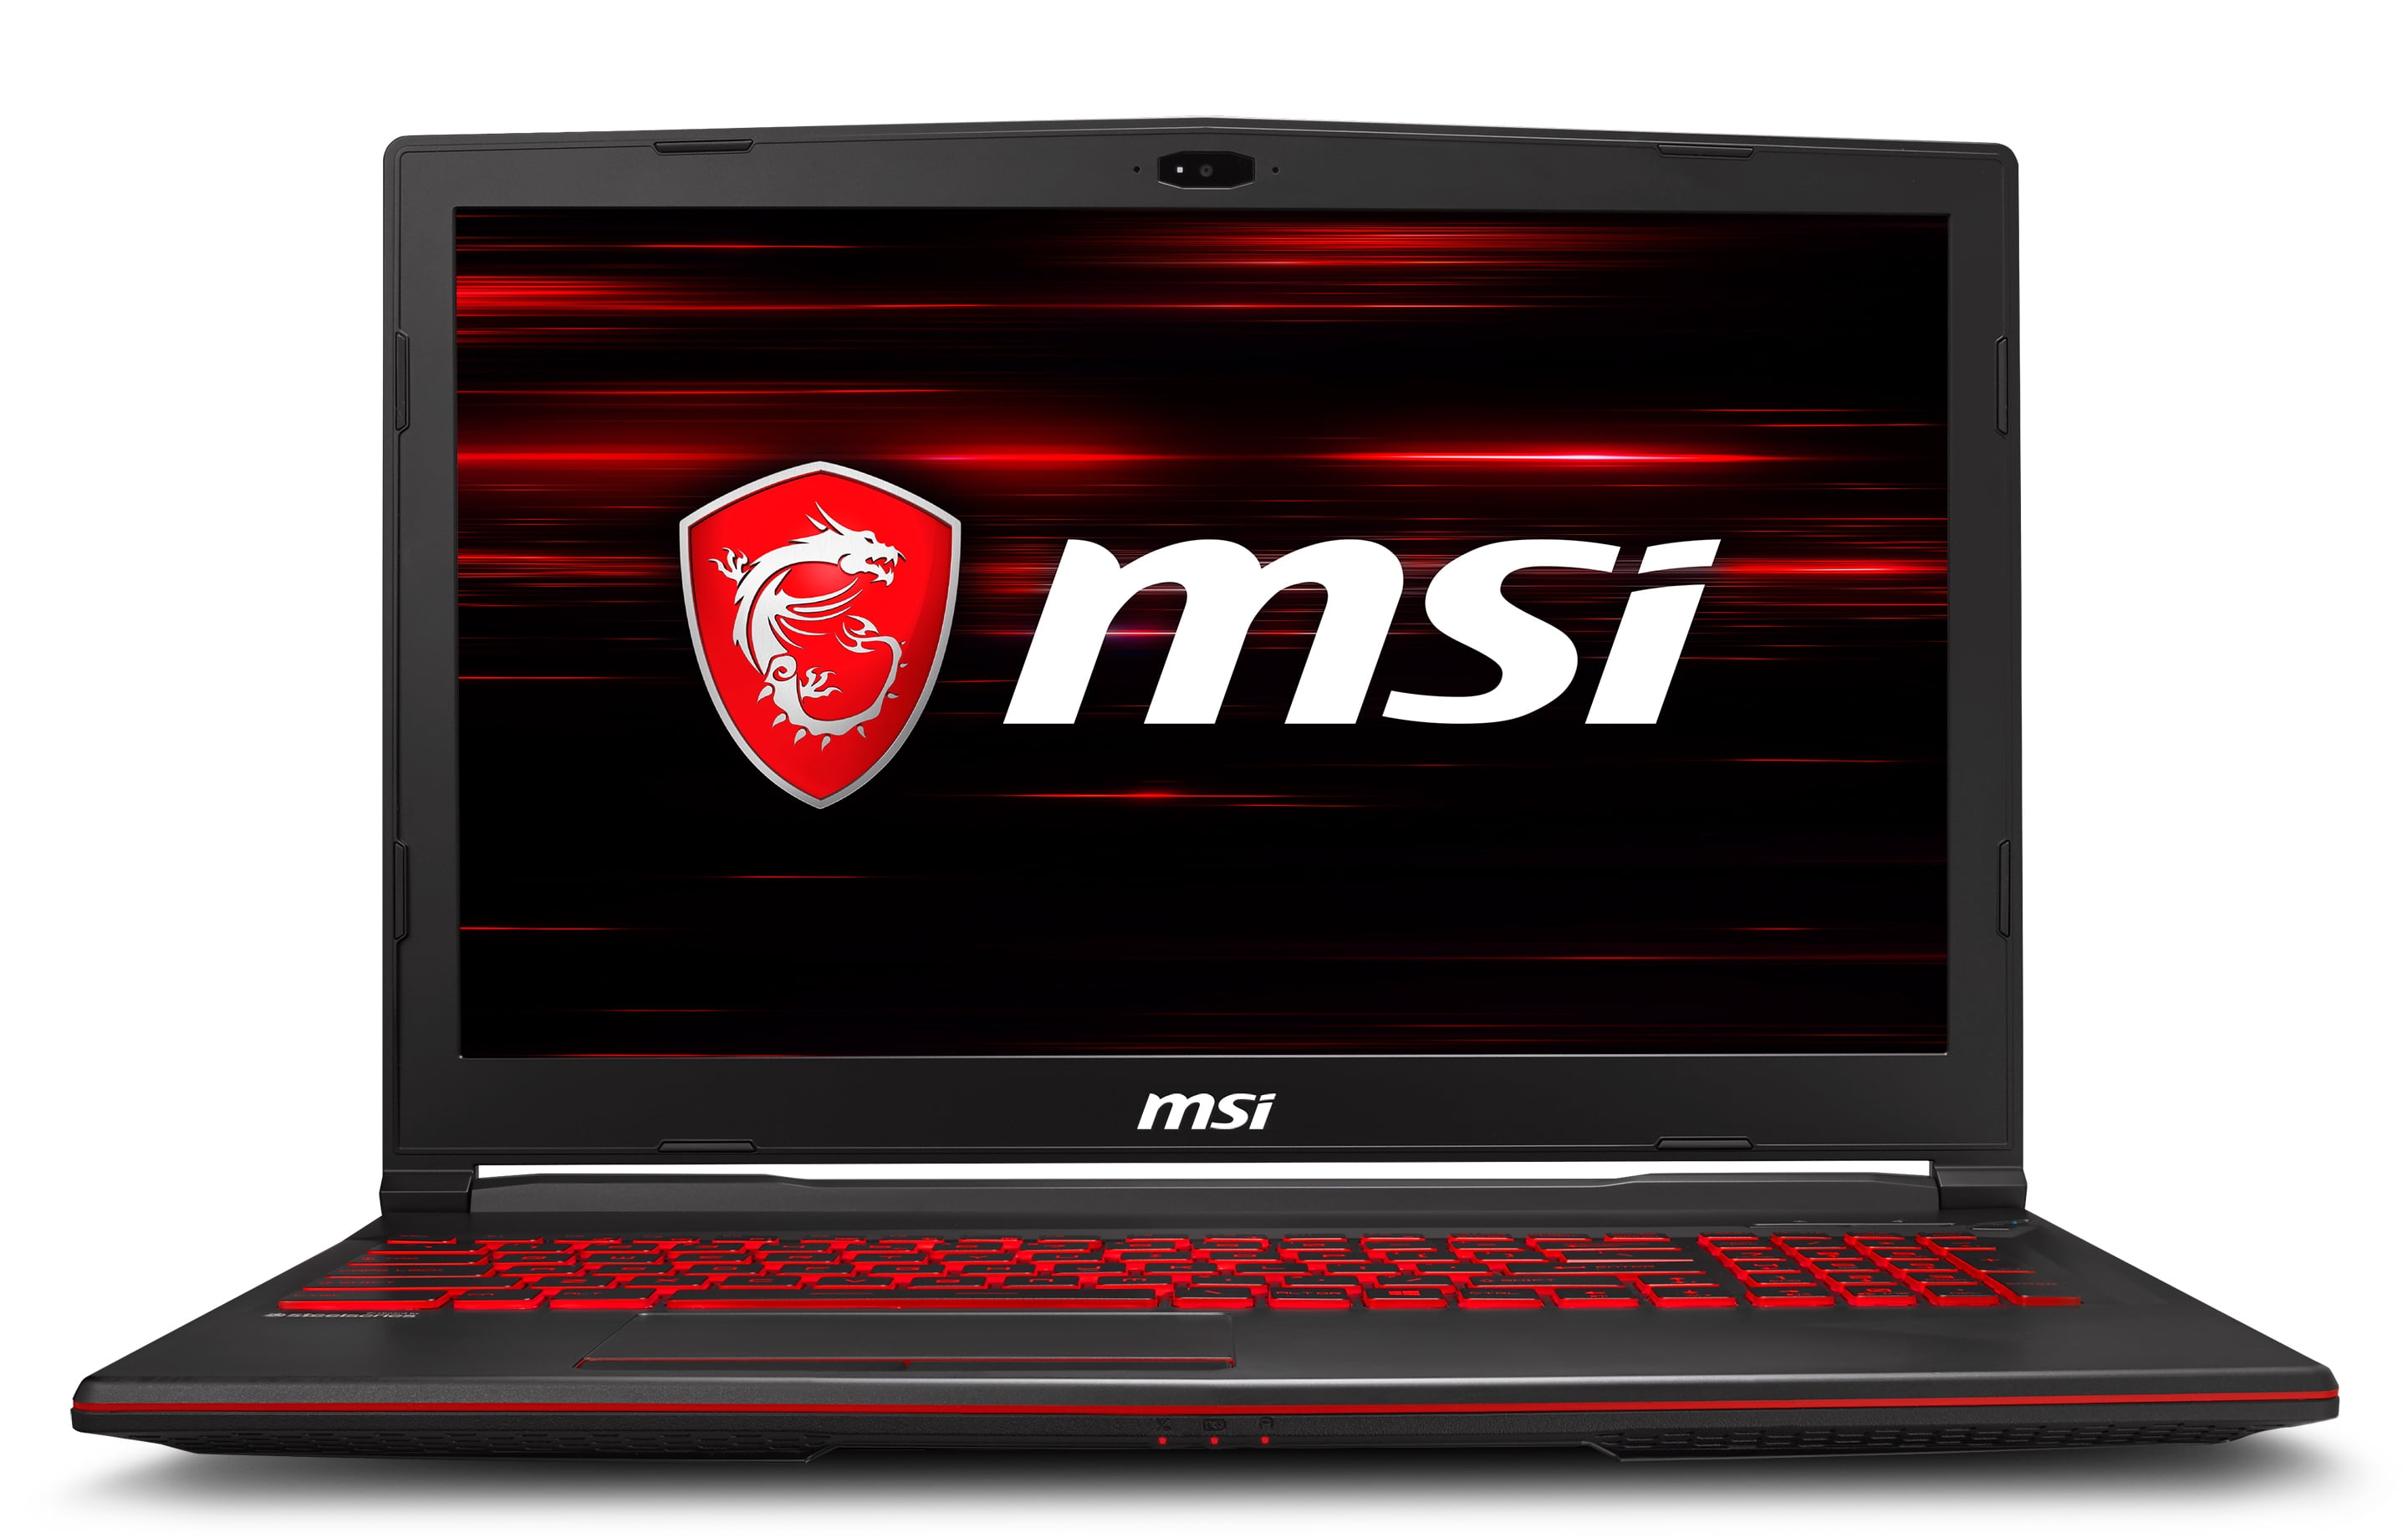 Buy MSI GL63 Gaming Laptop 15.6 Intel Core i7-8750H, NVIDIA GeForce GTX 1050, 8gb RAM, 256gb SSD + 1TB HDD Online at Lowest Price in Ubuy Nigeria. 586976837